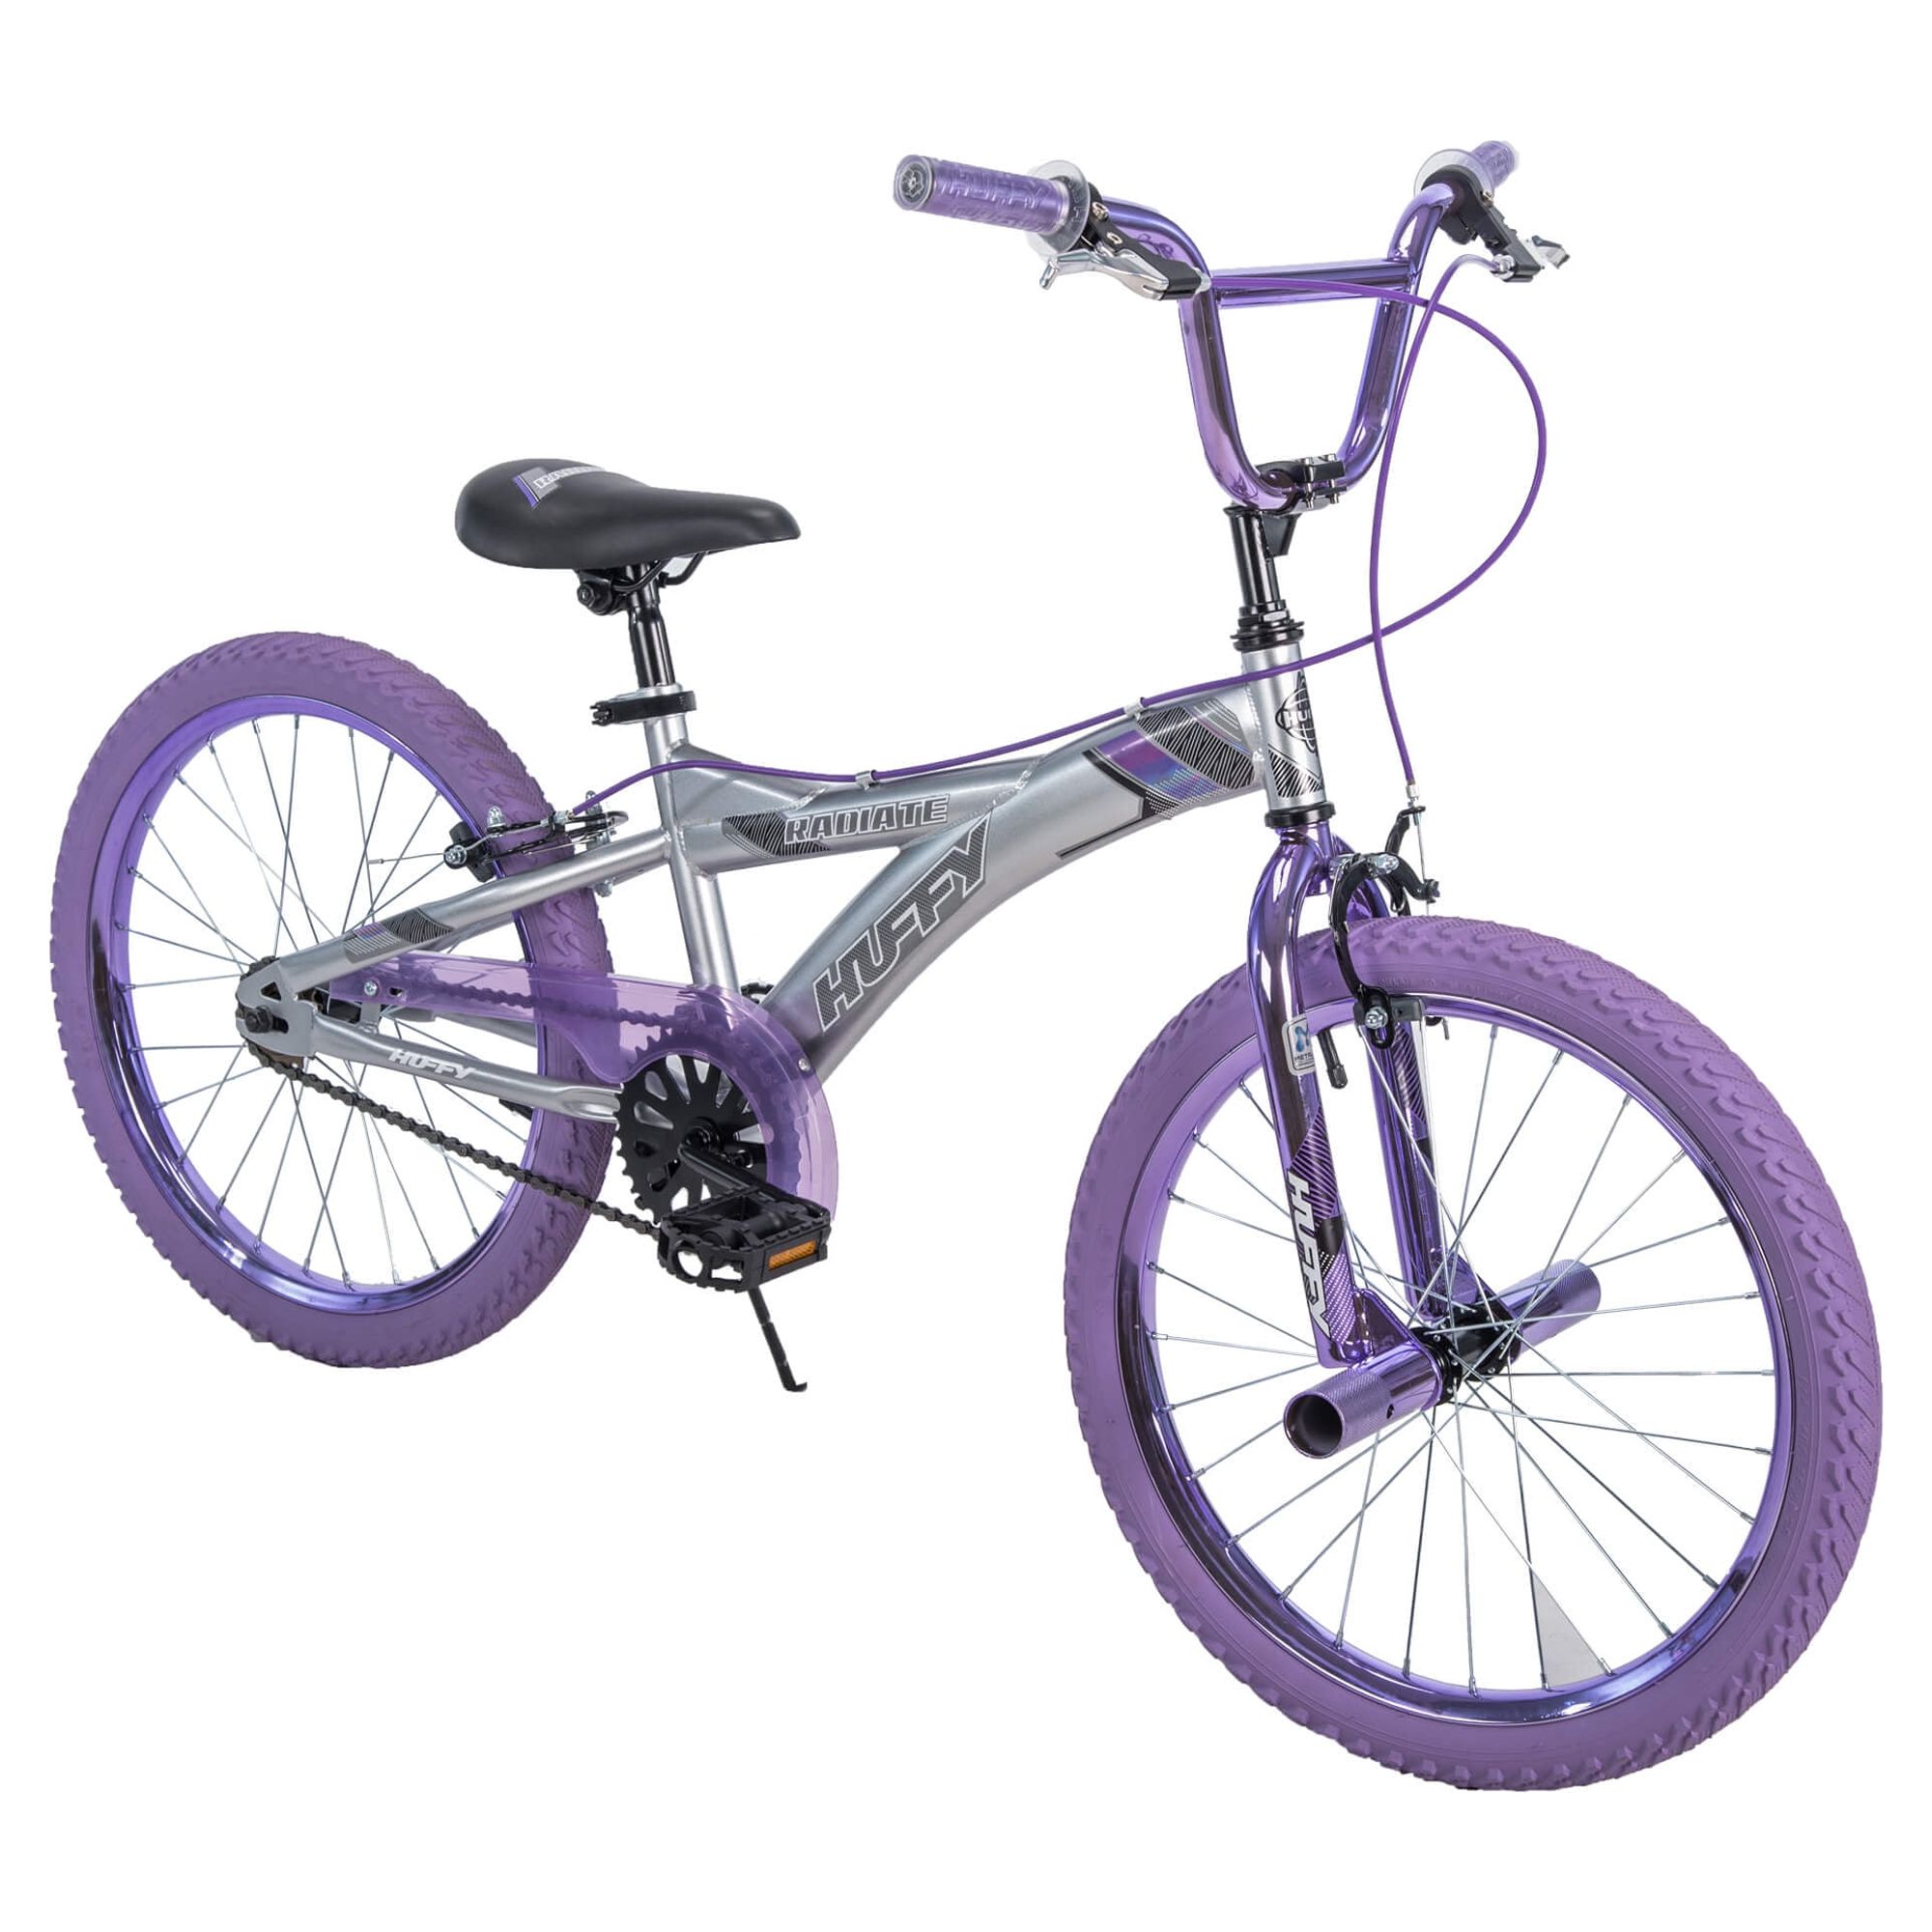 Huffy 20" Radium Girls' Metaloid BMX-Style Bike, Purple - image 1 of 6